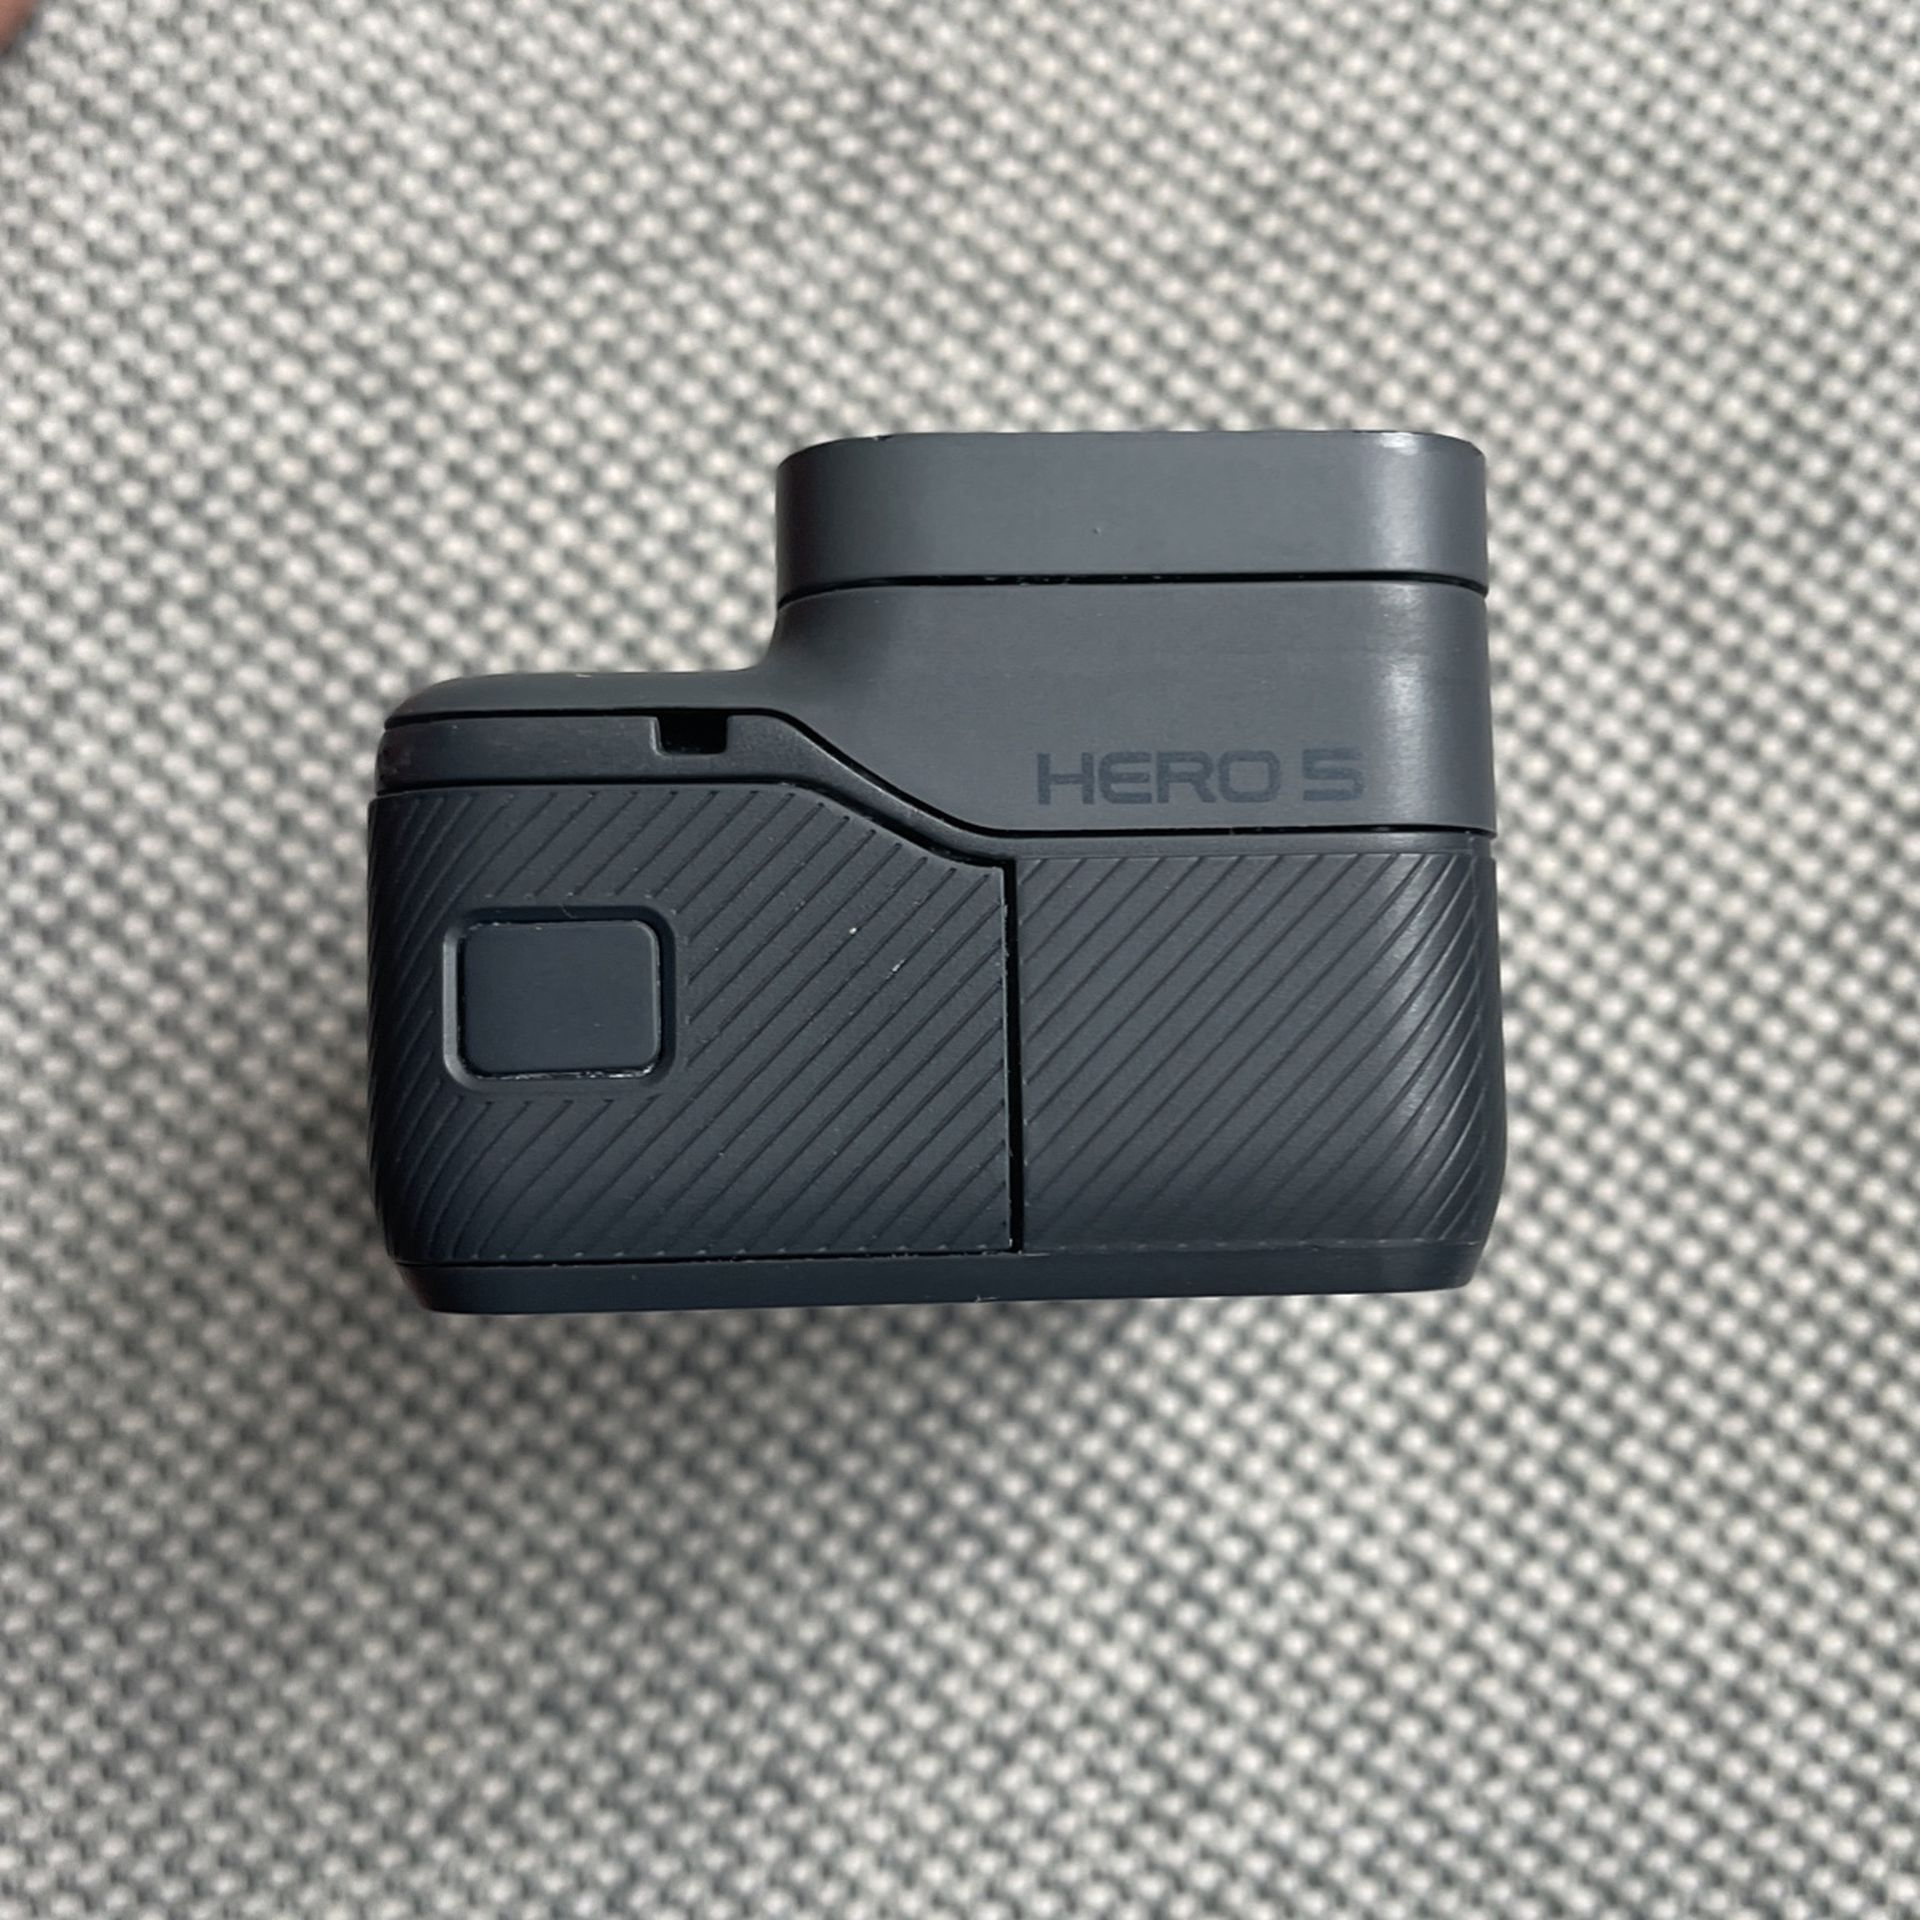 GoPro Hero 5 With Case And Selfi Tripod 